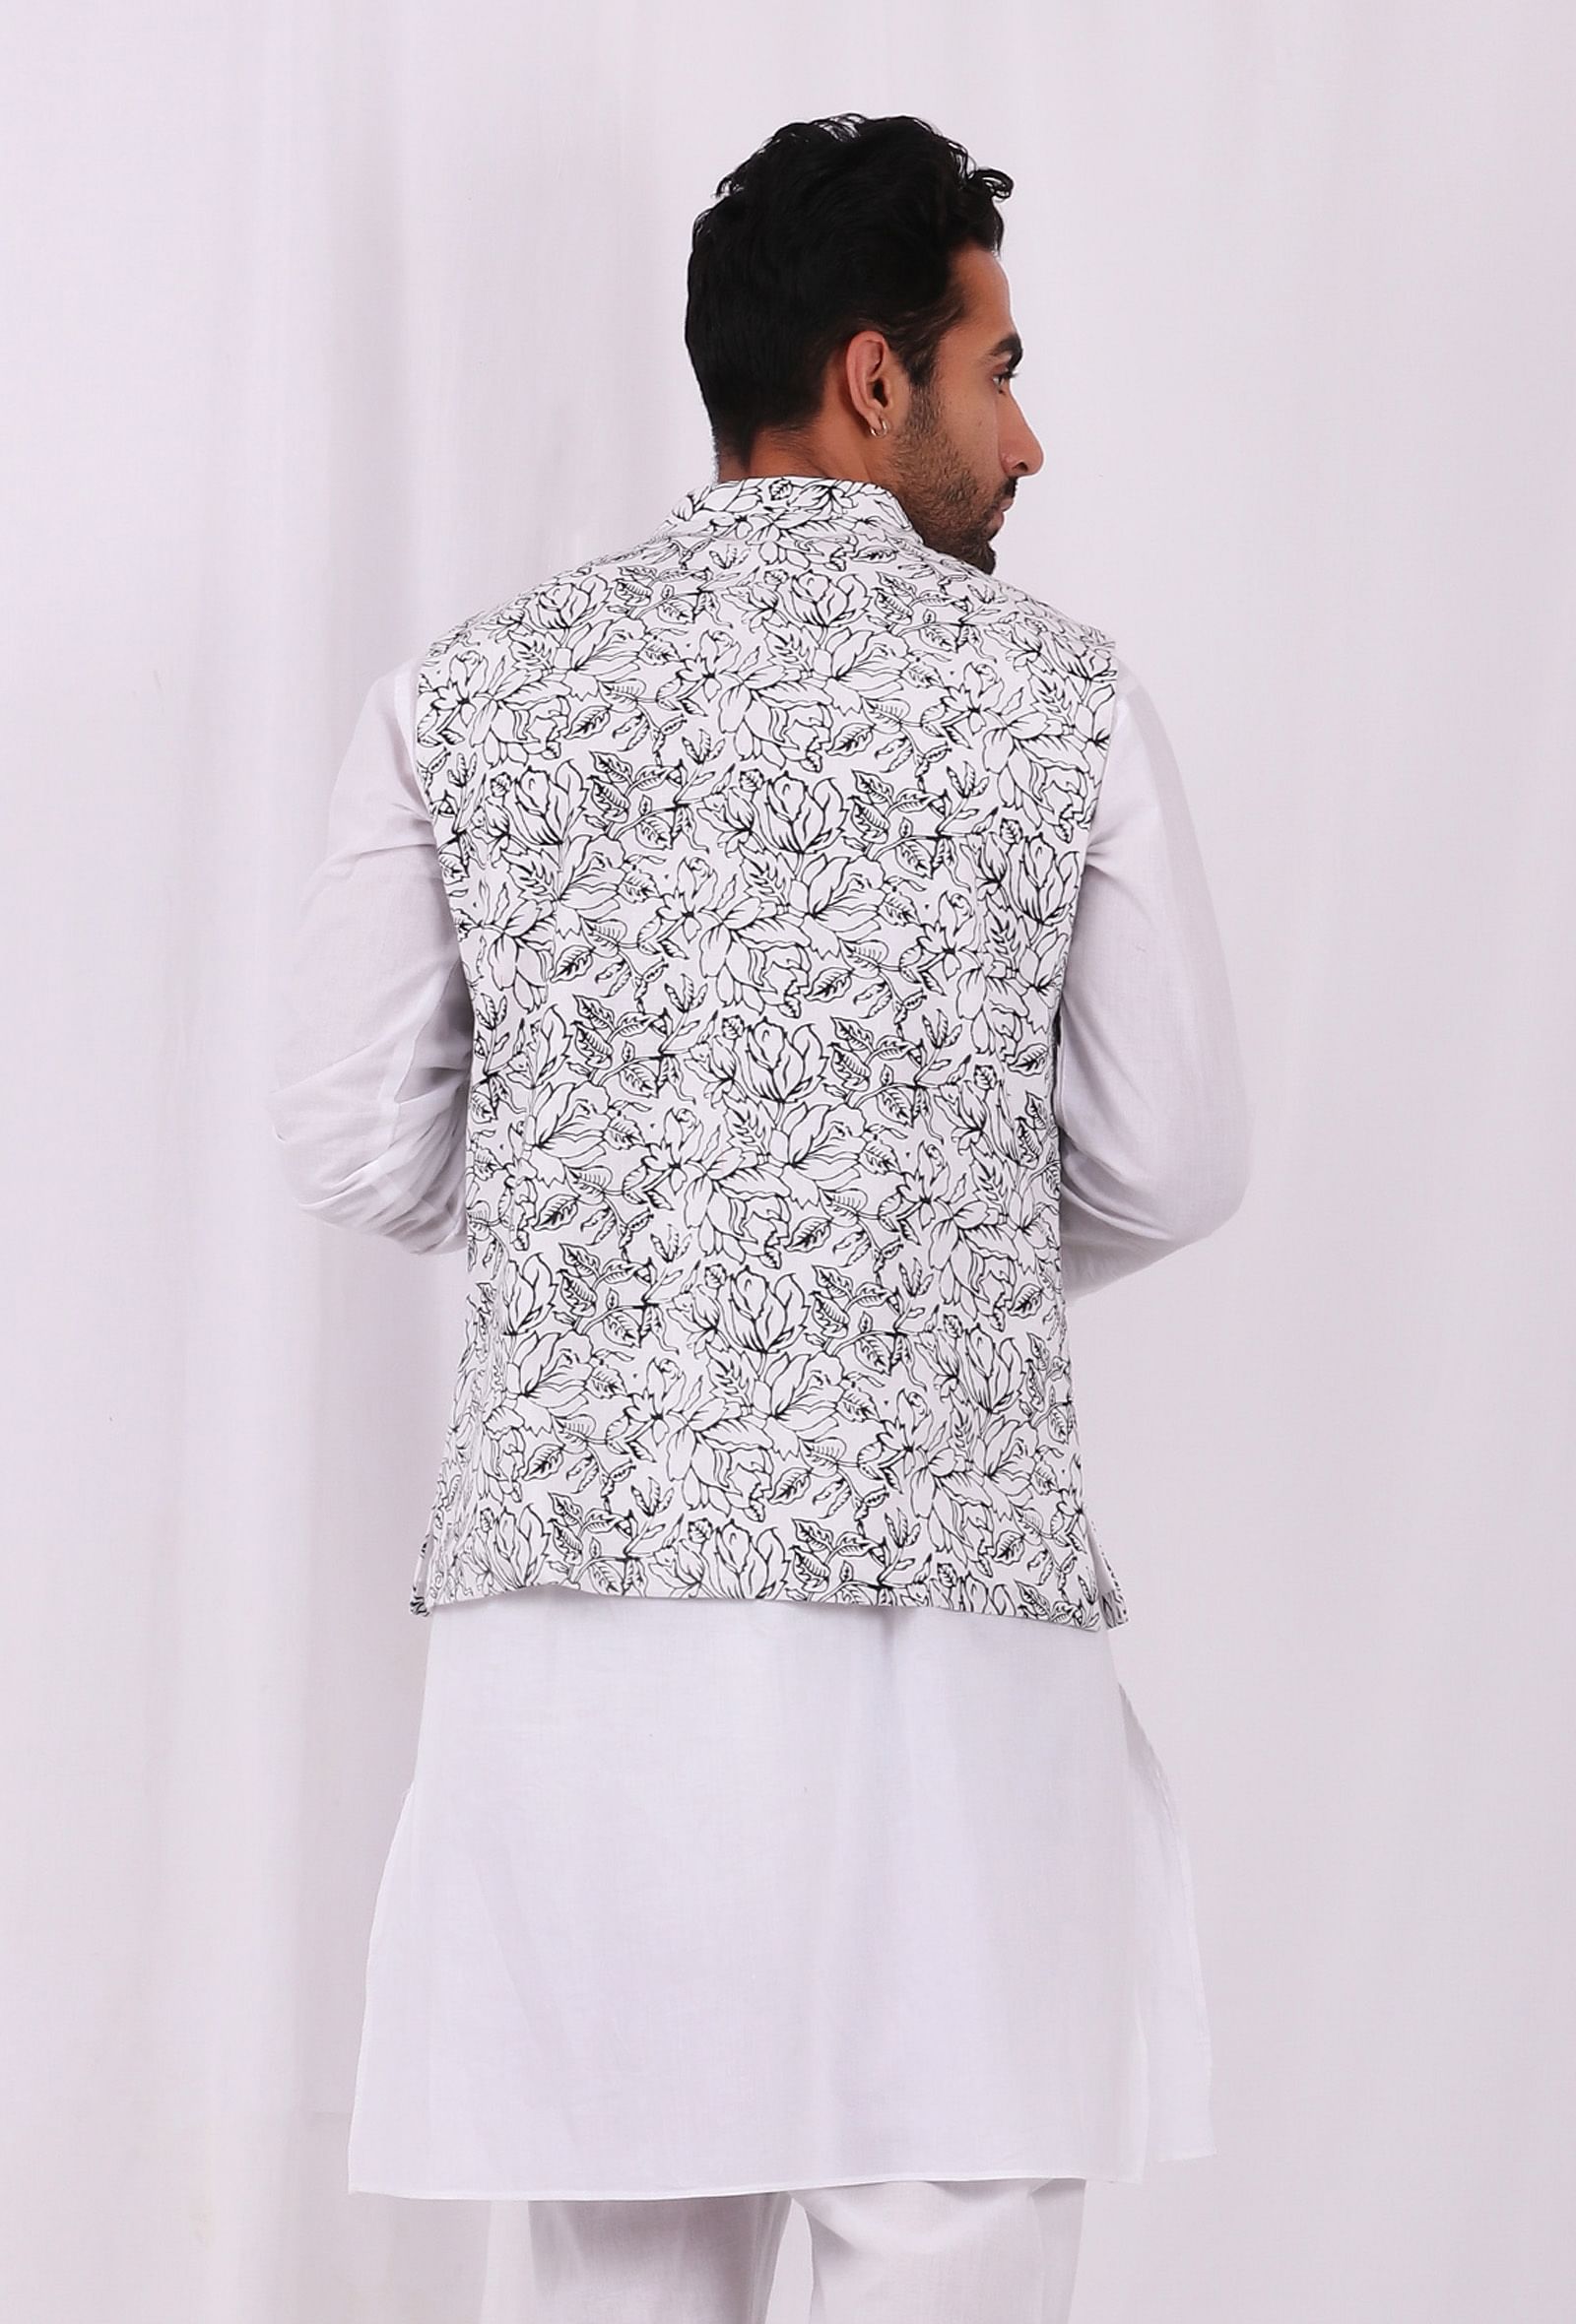 Black and White Floral Hand Block Cotton Nehru Jacket